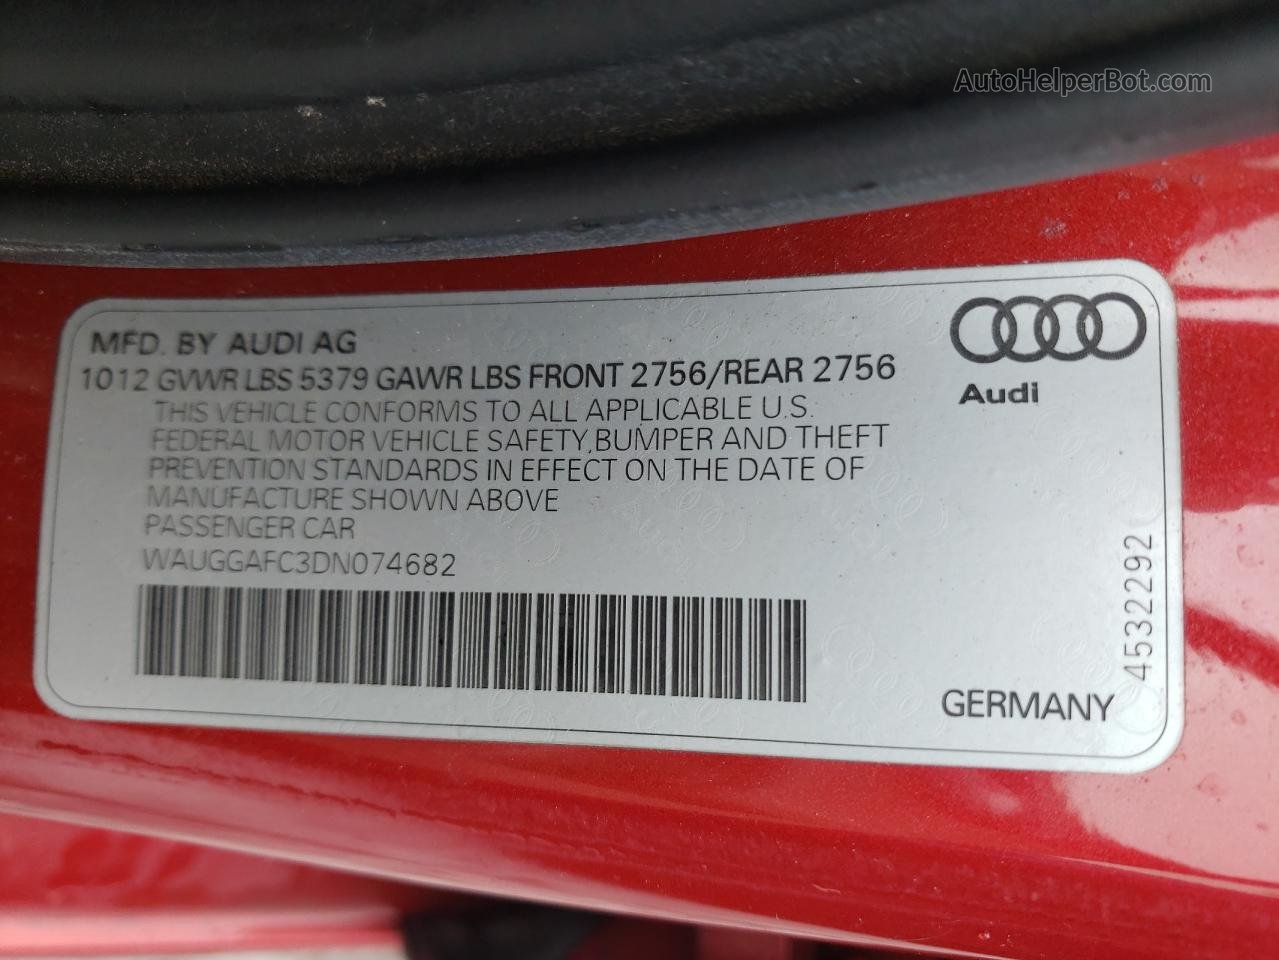 2013 Audi A6 Premium Plus Red vin: WAUGGAFC3DN074682